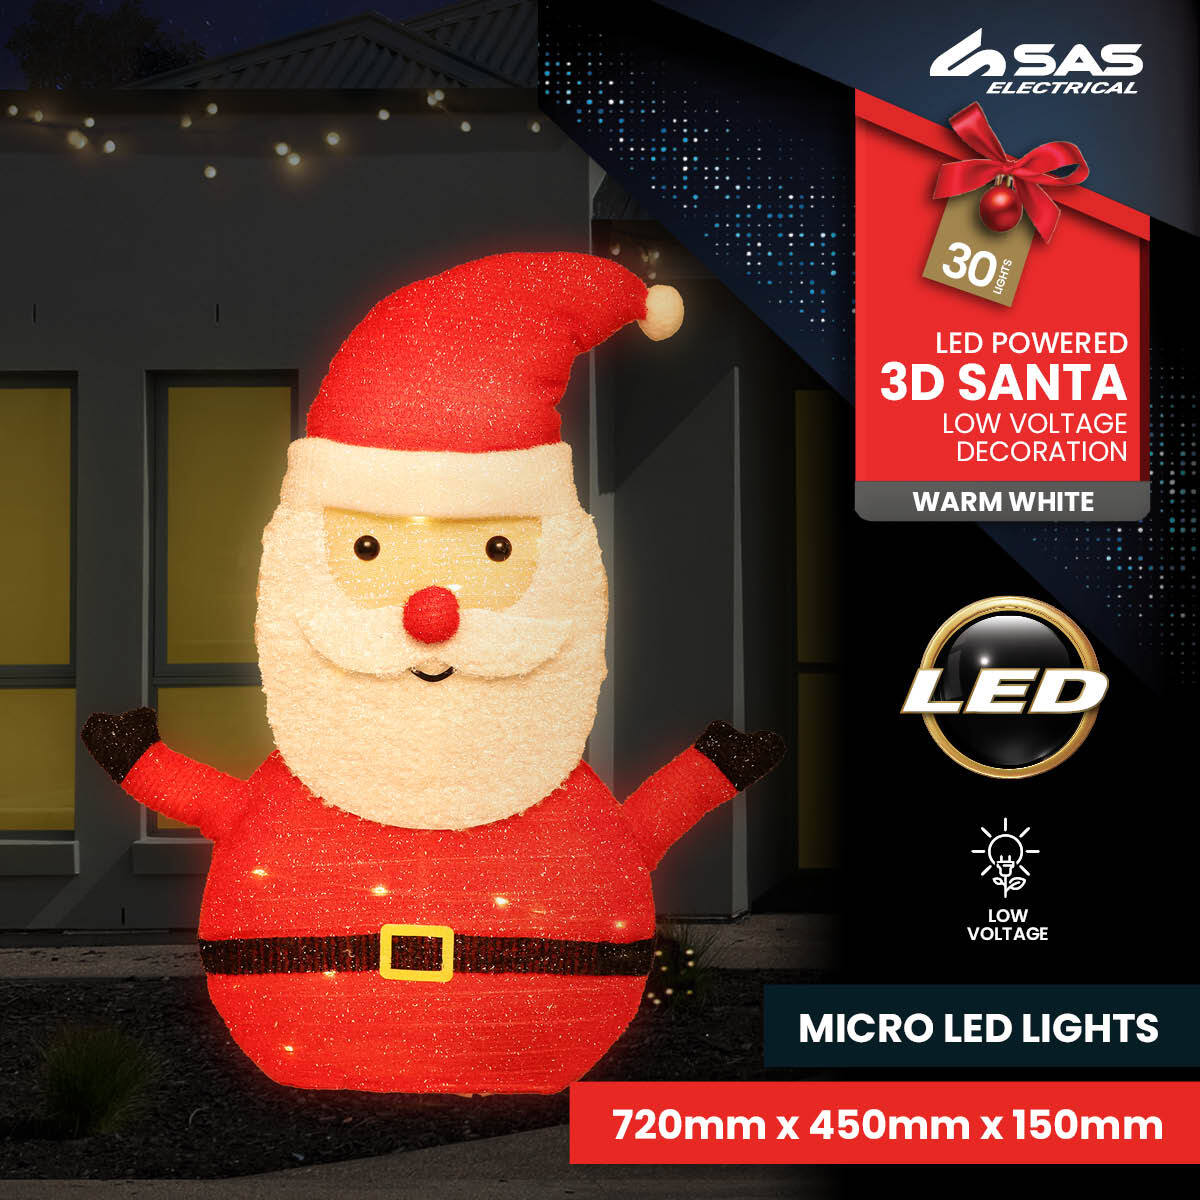 SAS Electrical 45 x 72cm 3D Santa Ornament Warm White LED Lighting